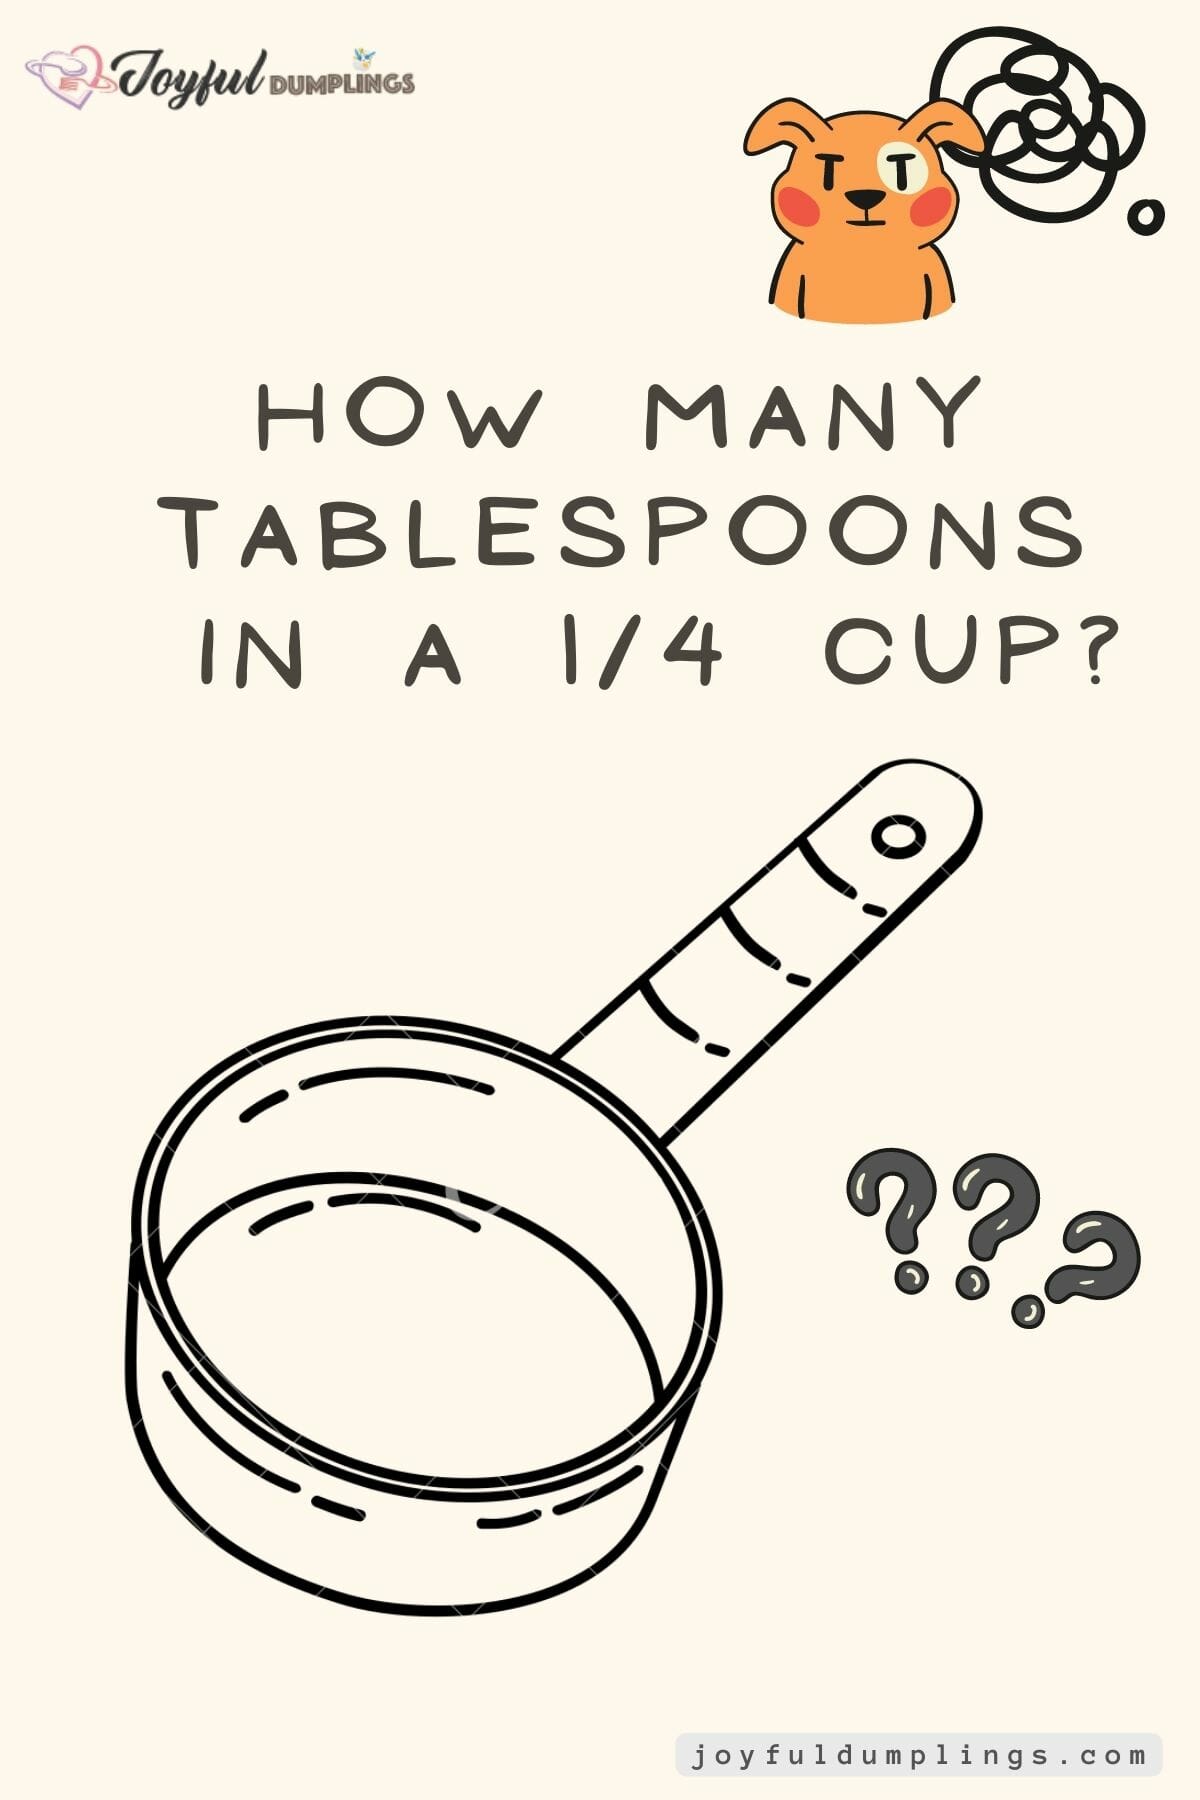 https://joyfuldumplings.com/wp-content/uploads/2022/10/how-many-tablespoons-in-1-4-cup.jpg